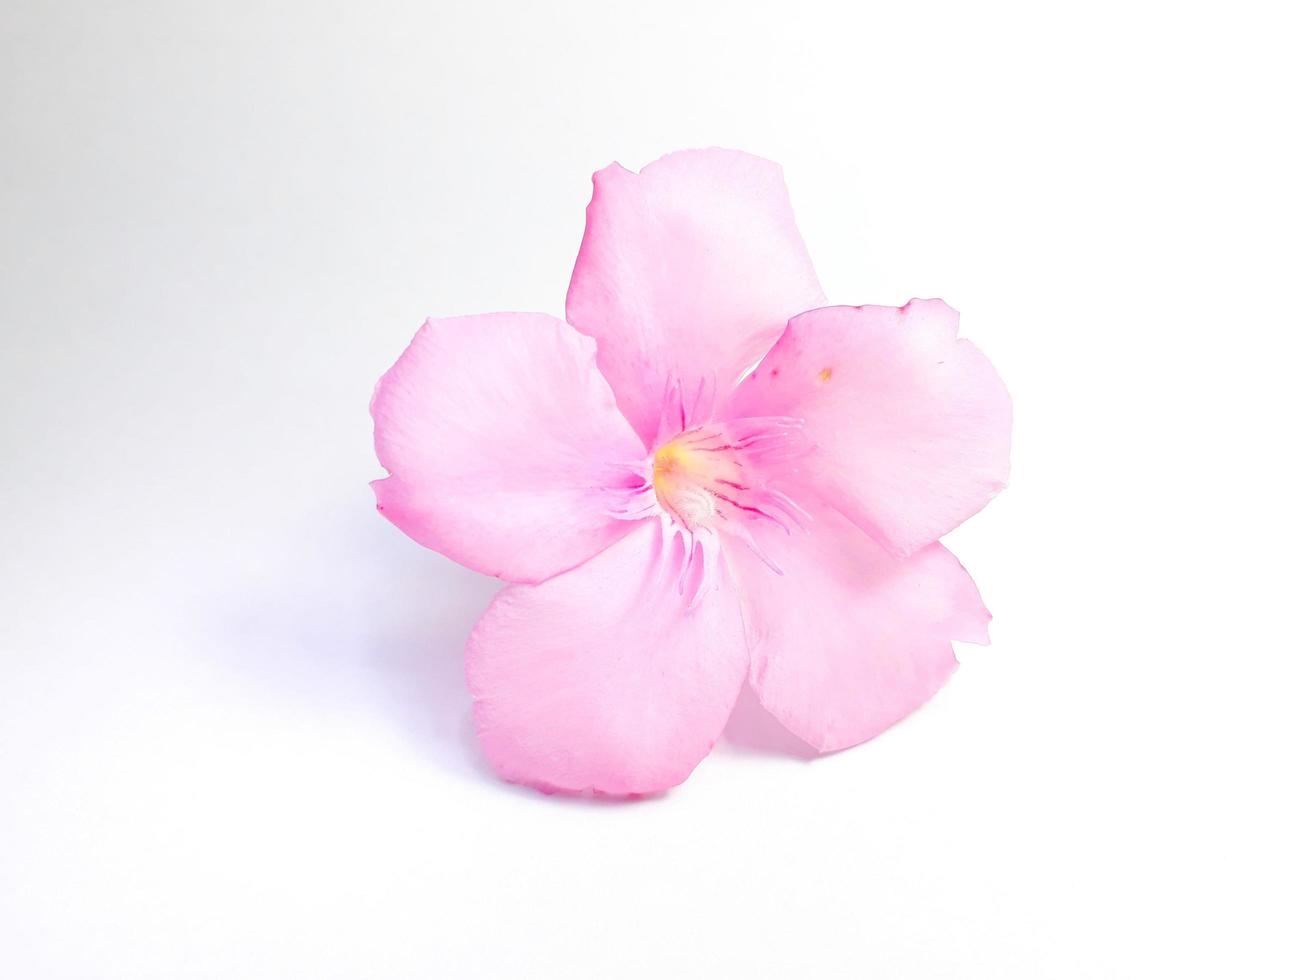 imagen de flores de frangipani rosas descansando sobre un fondo blanco. foto